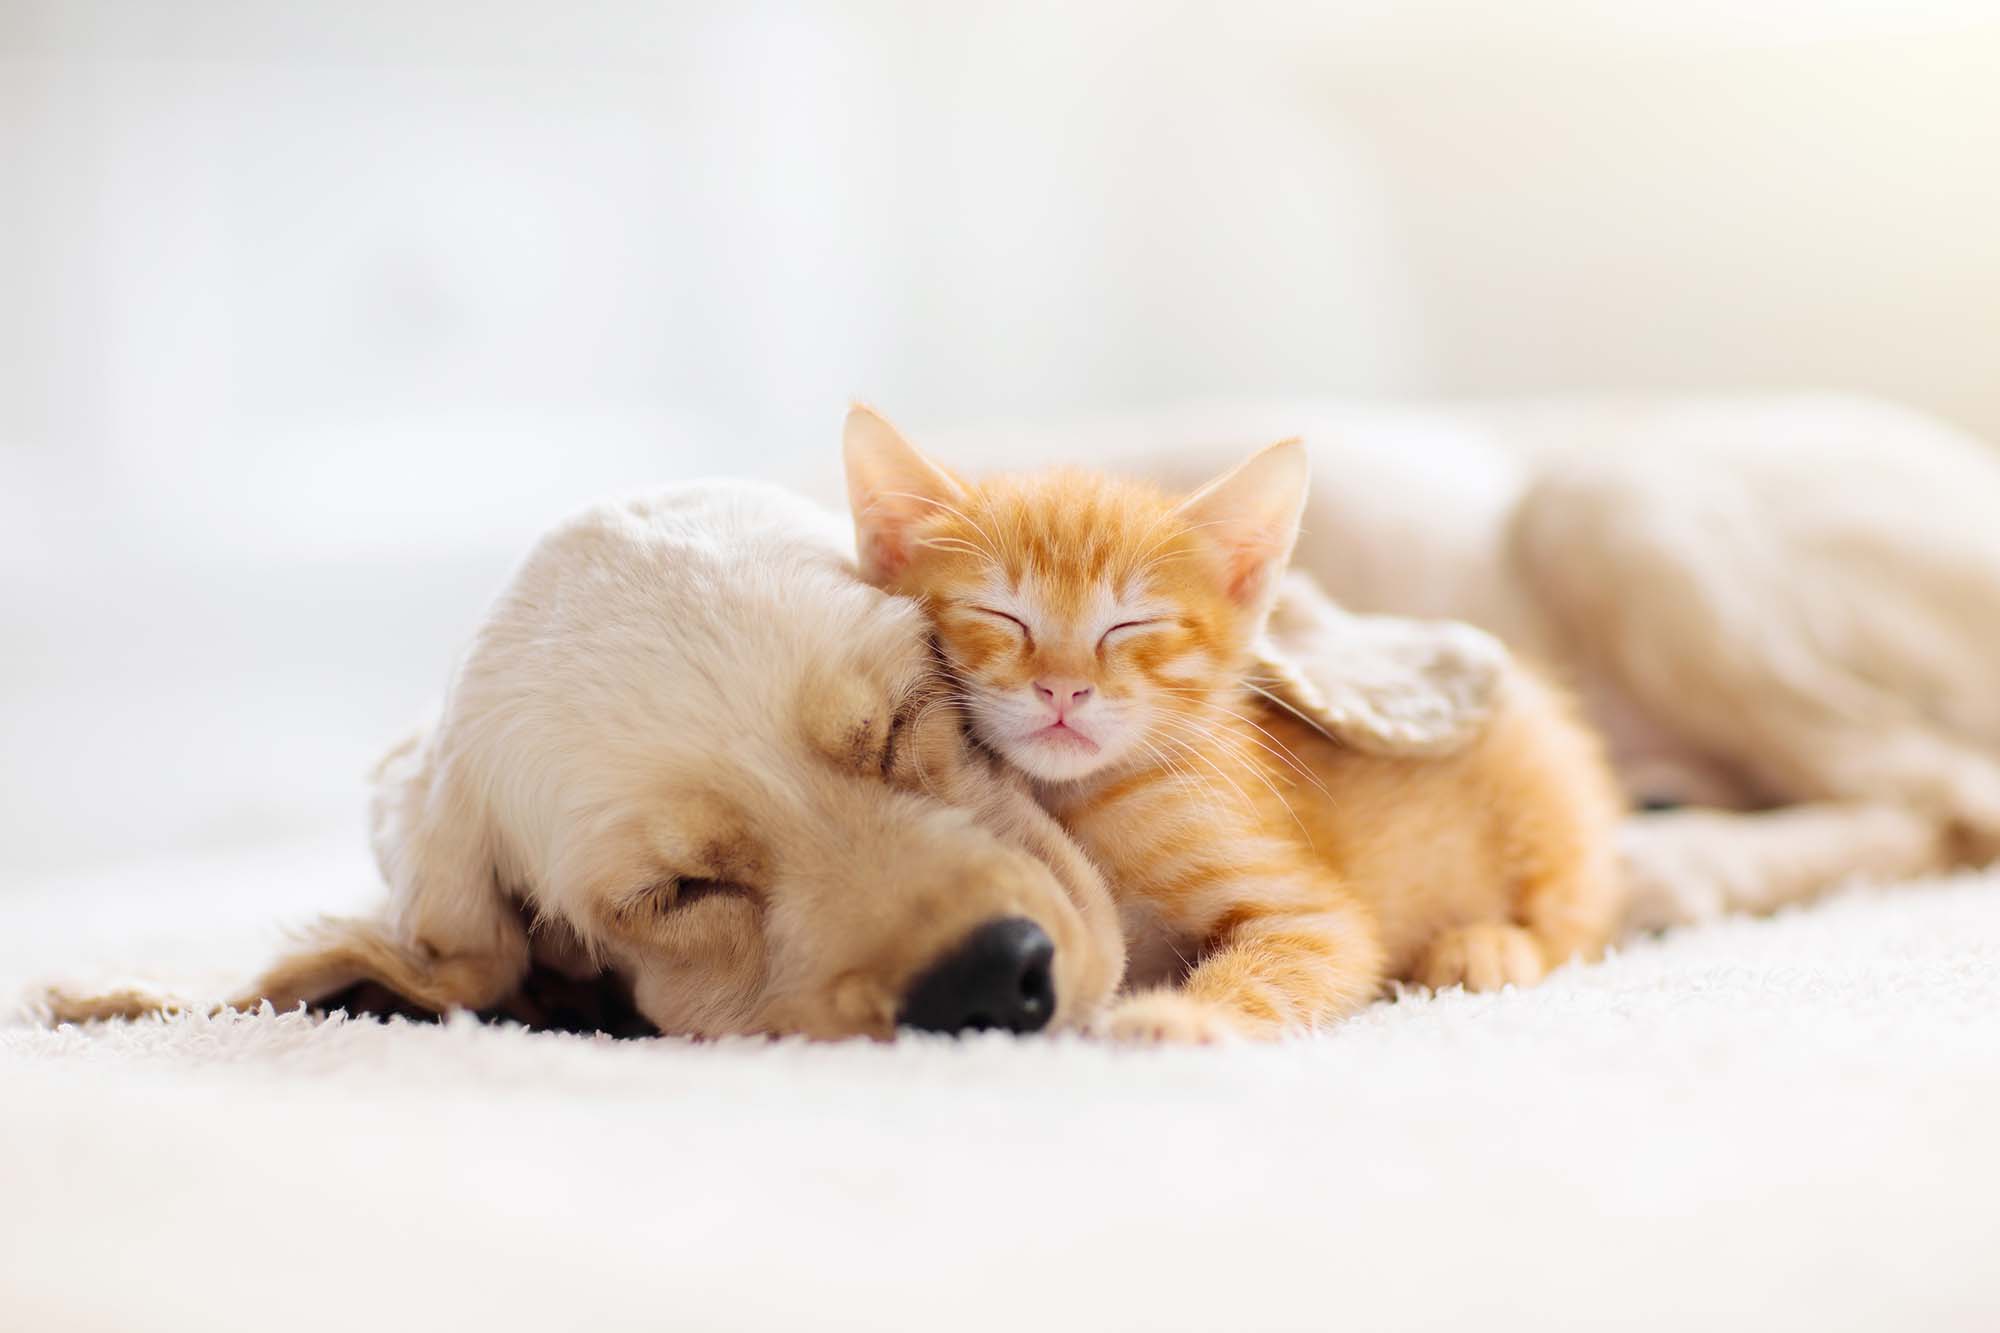 Dog & cat sleeping